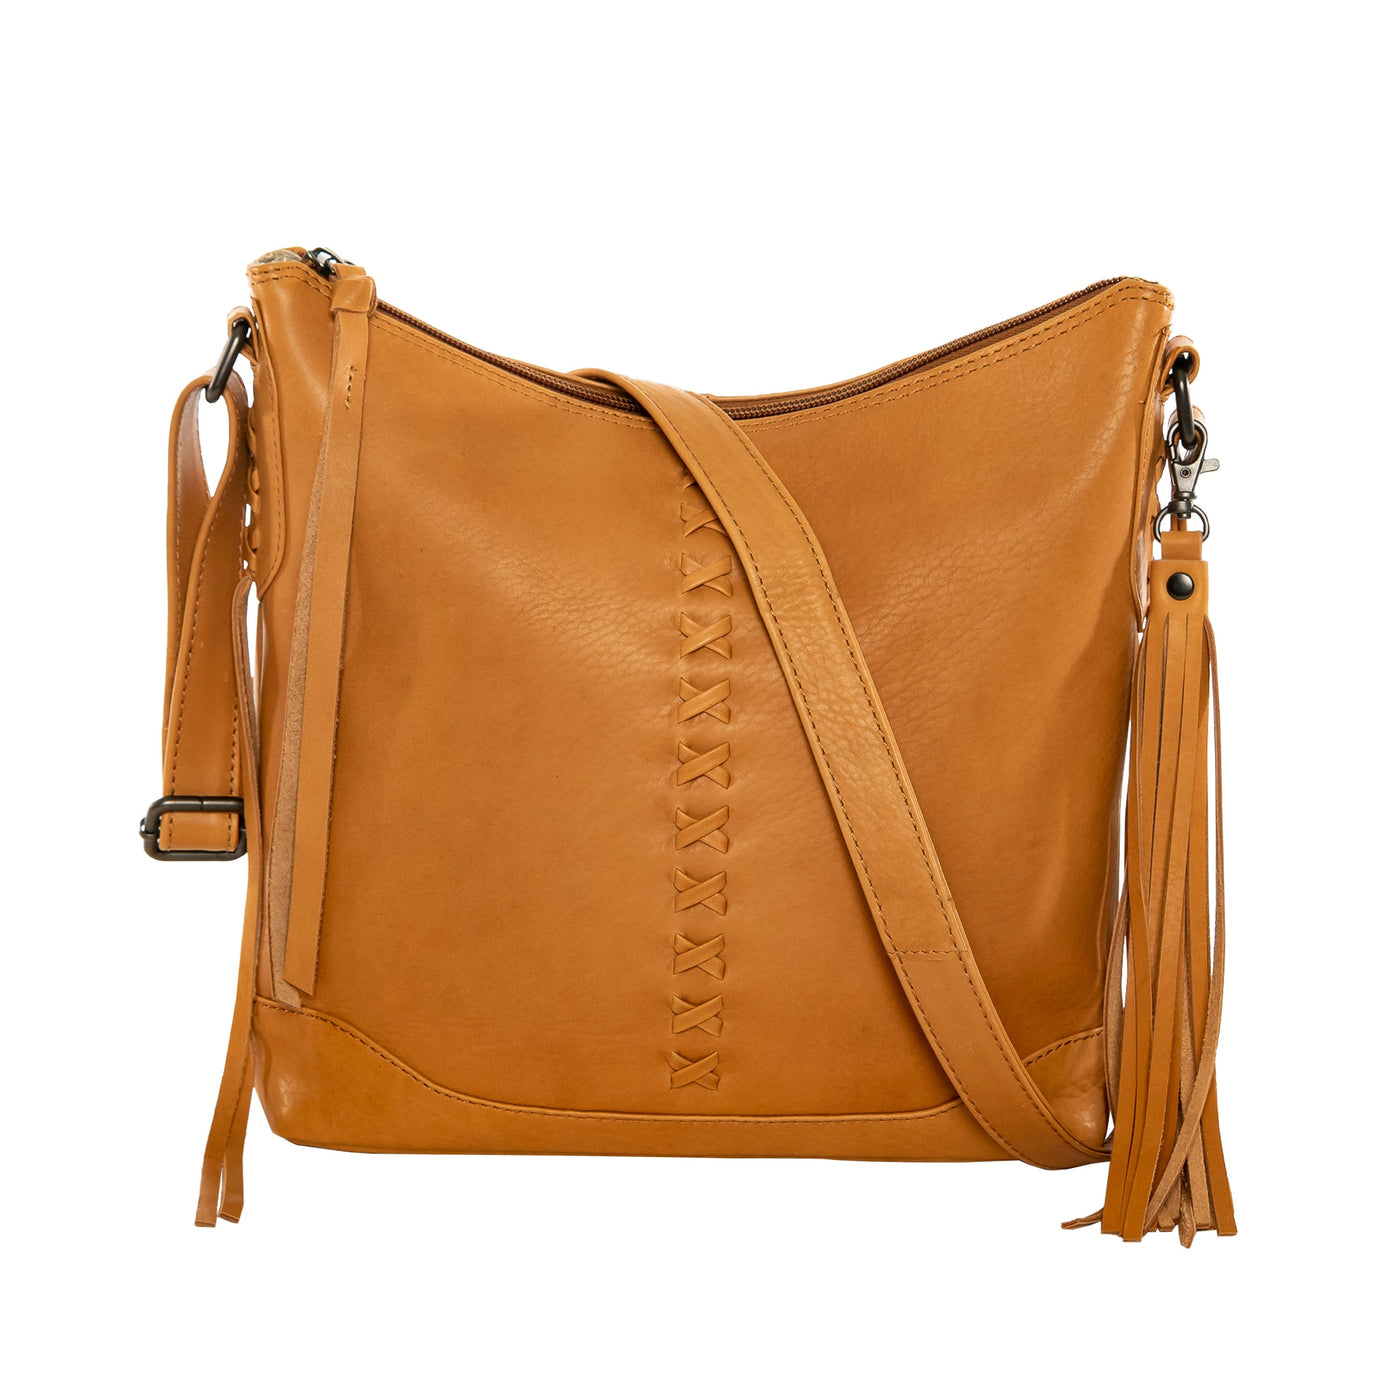 Ciana Women's Genuine Leather Cross Body Bag Purse